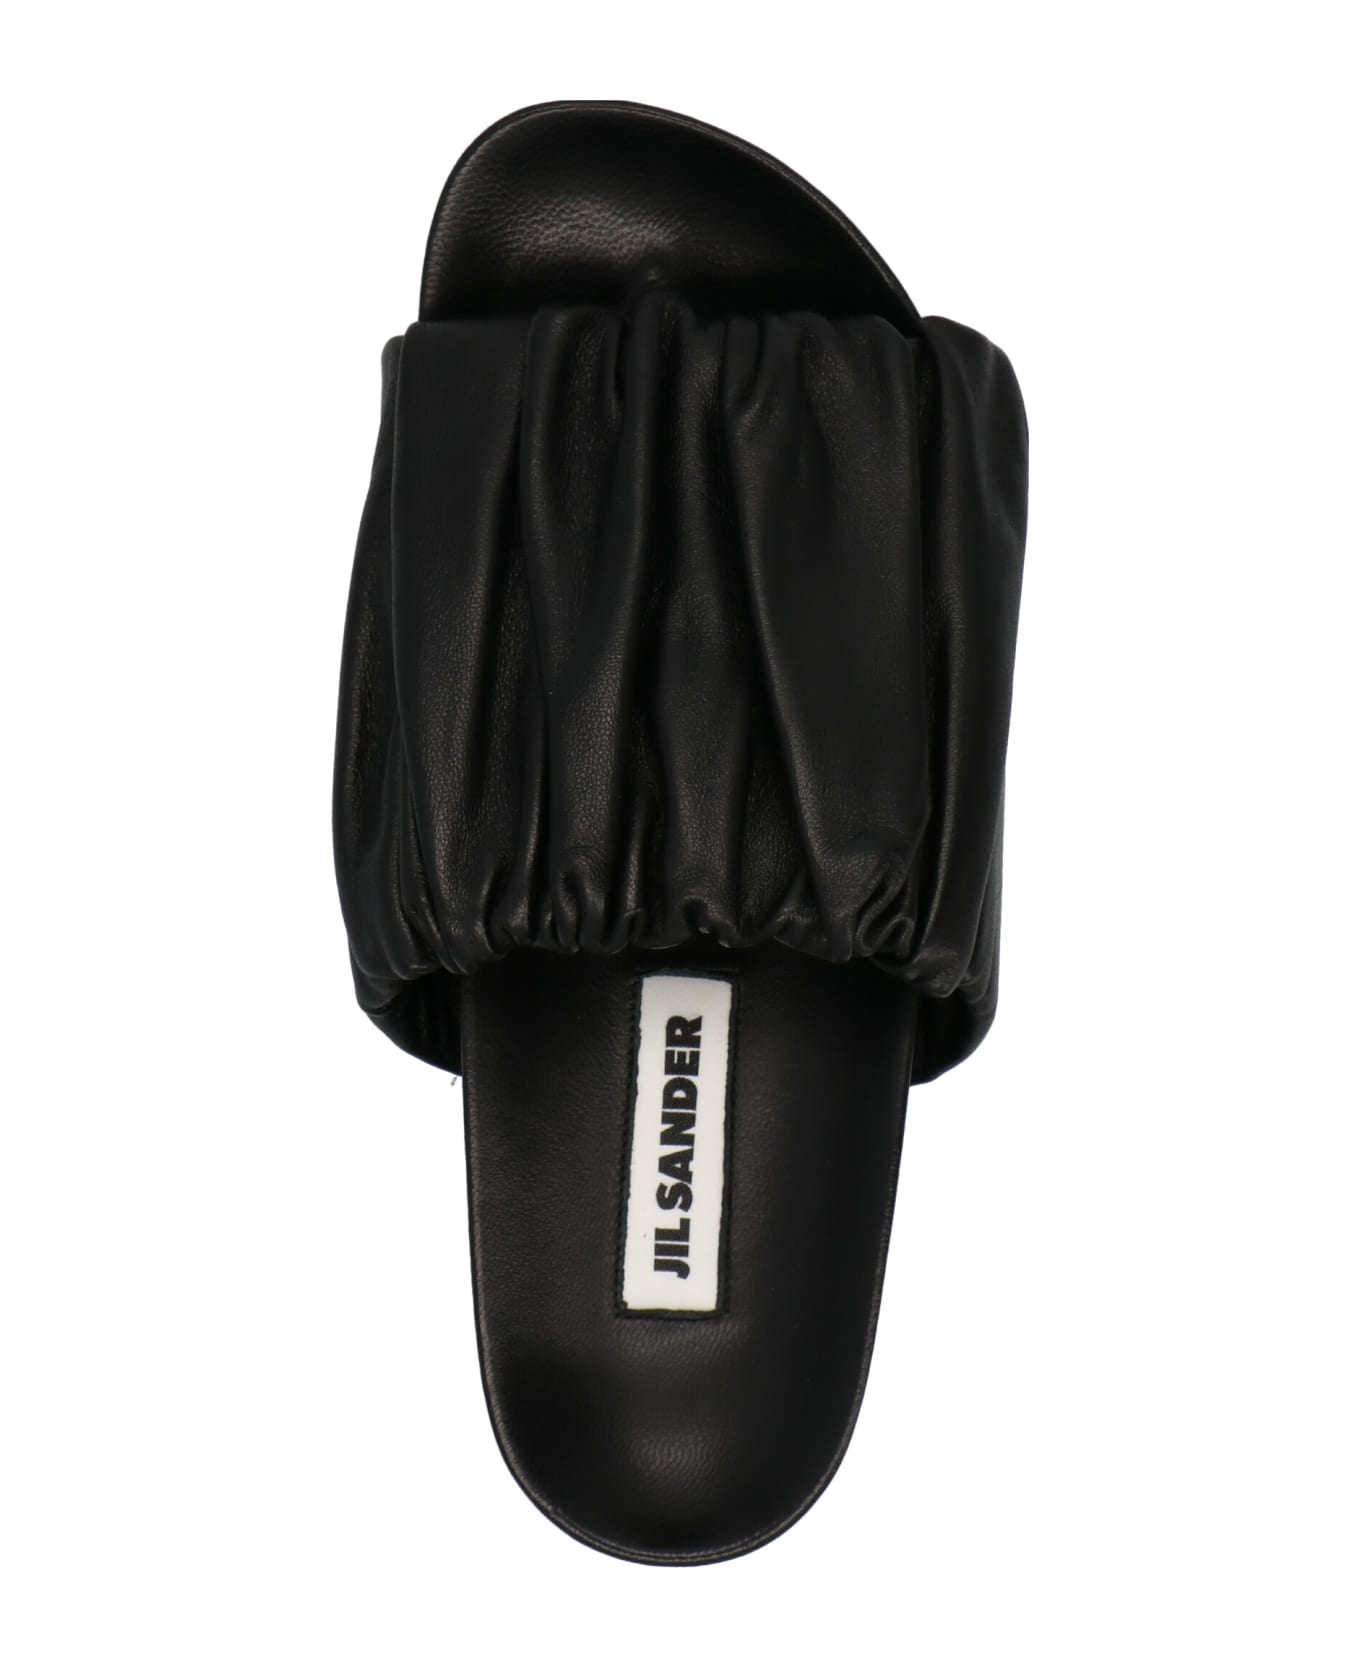 Jil Sander Leather Sandals - Black   サンダル